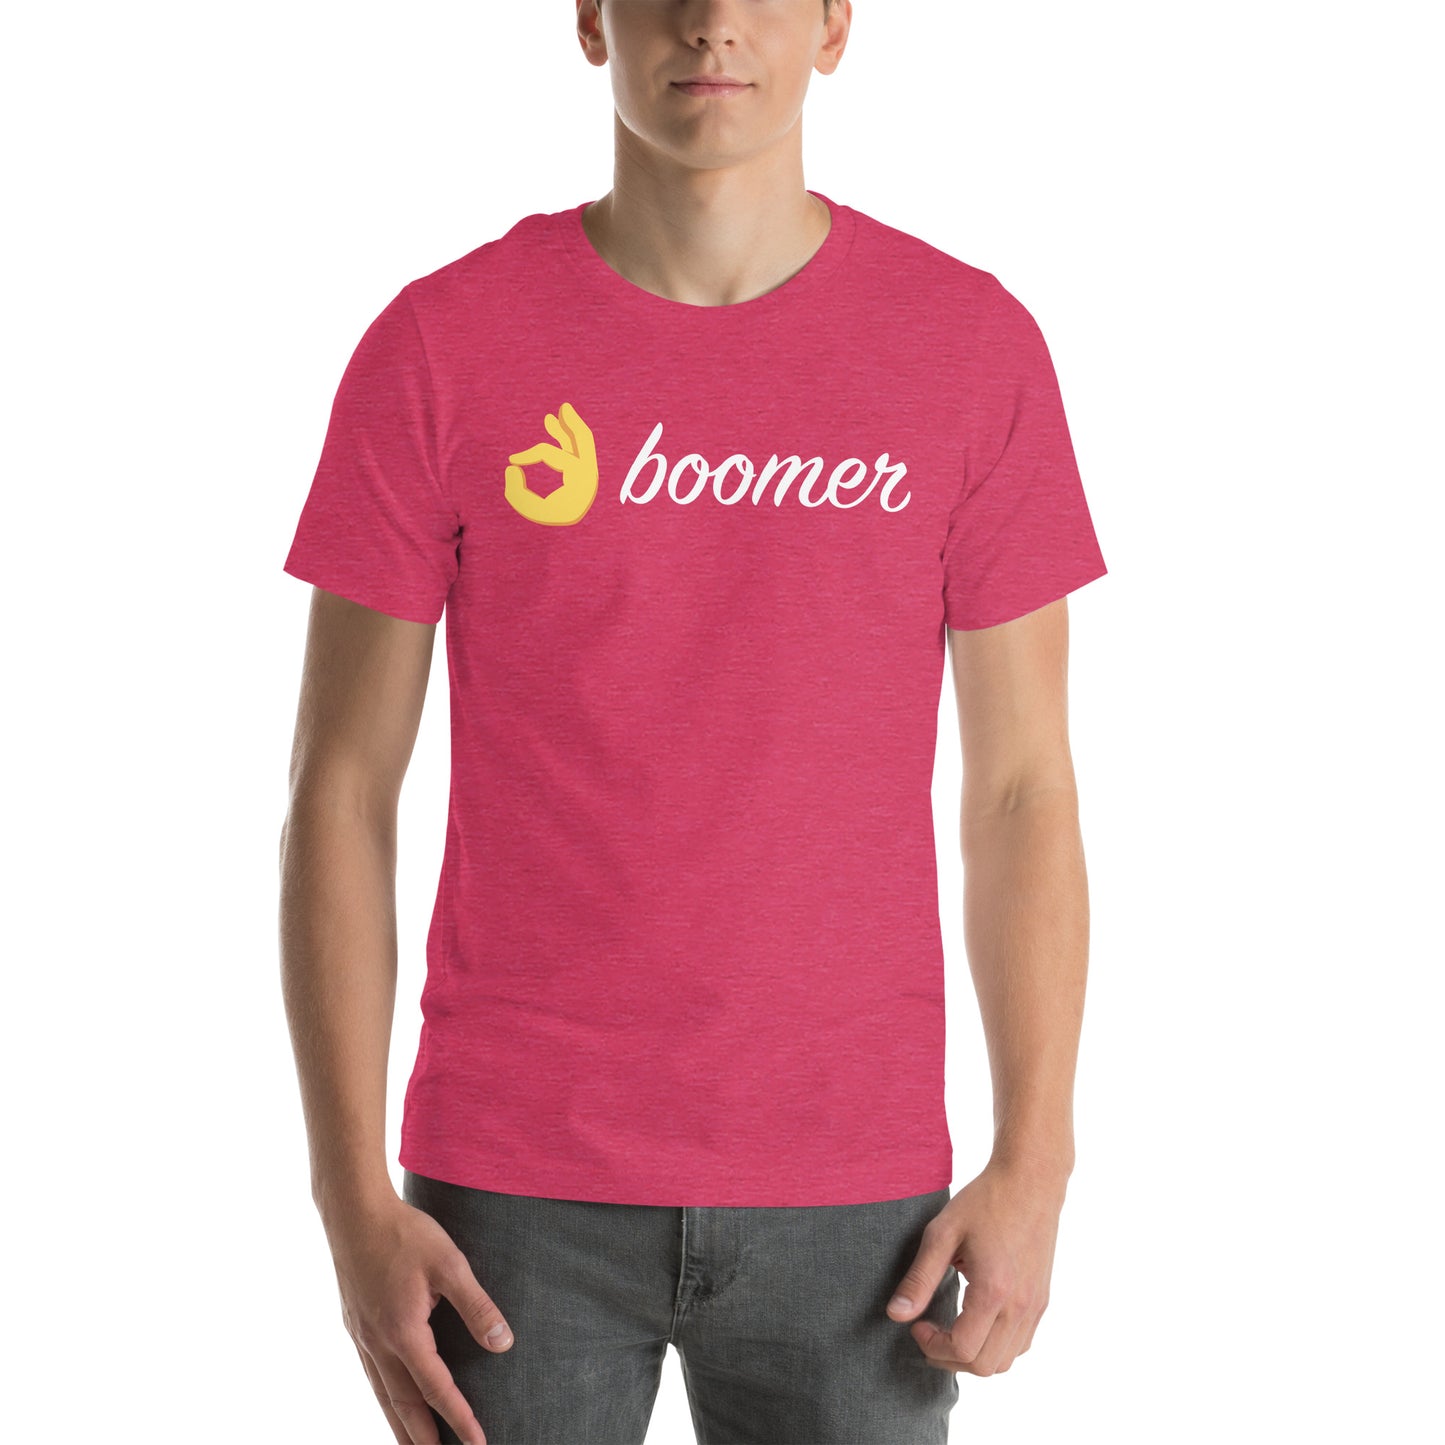 Classic OK Boomer light t-shirt